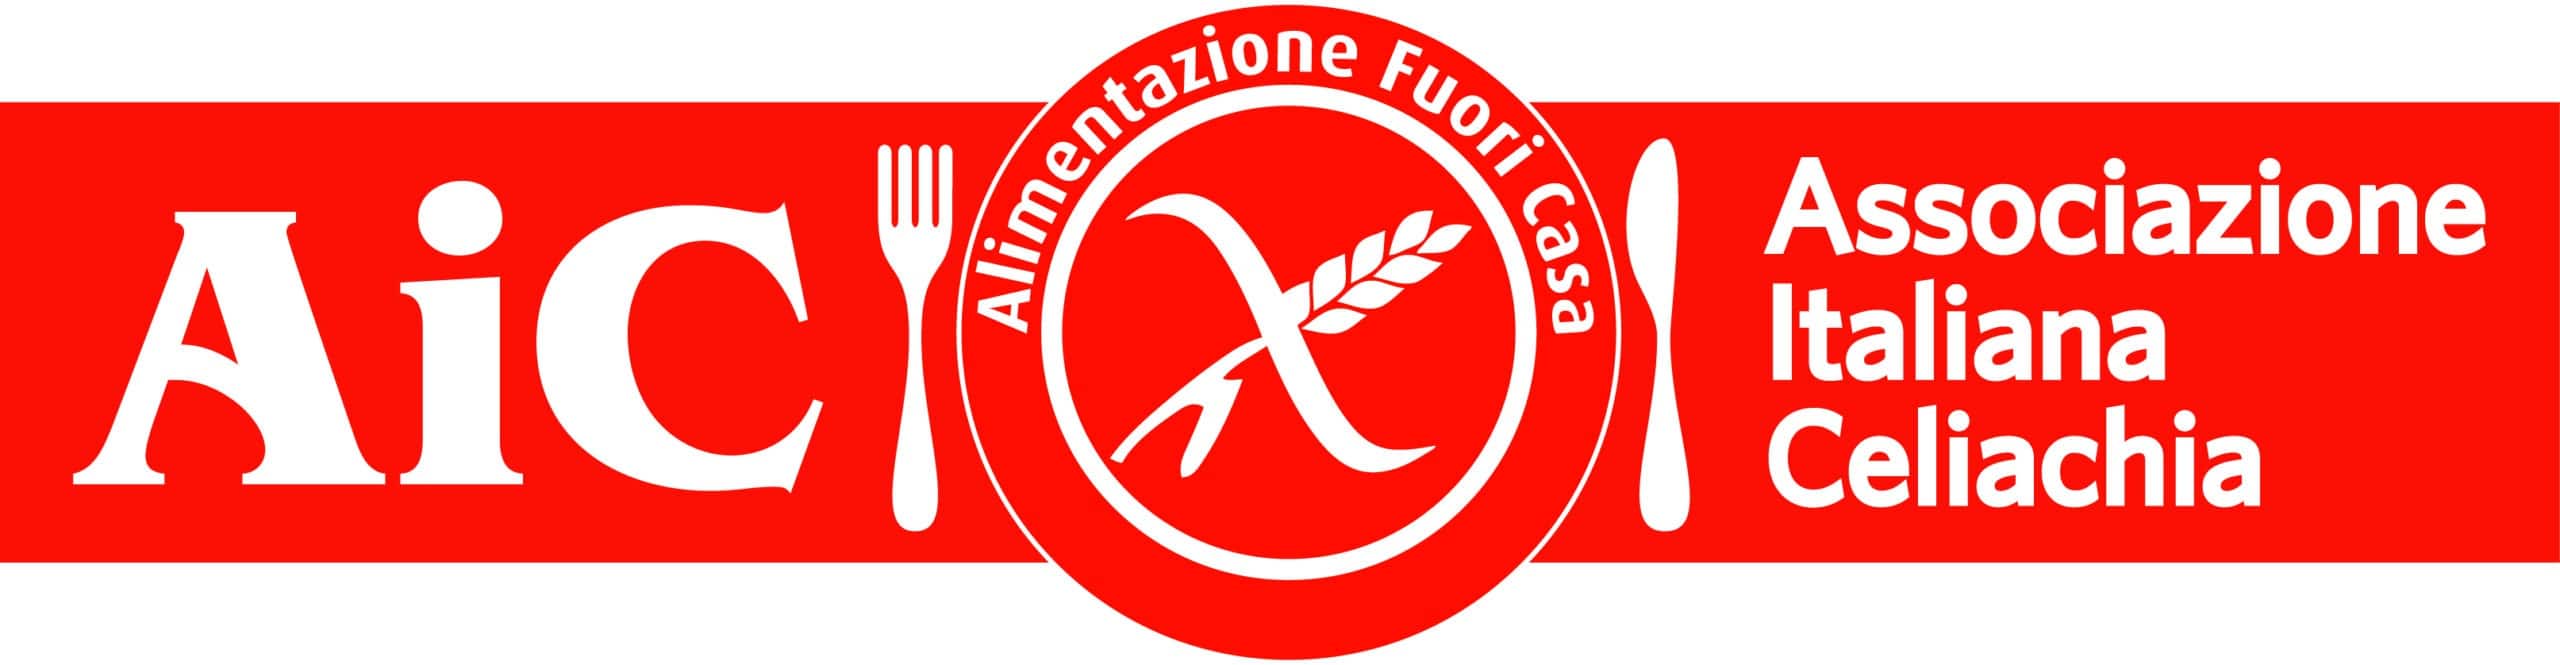 logo dell'aic, associazione italiana celiachia